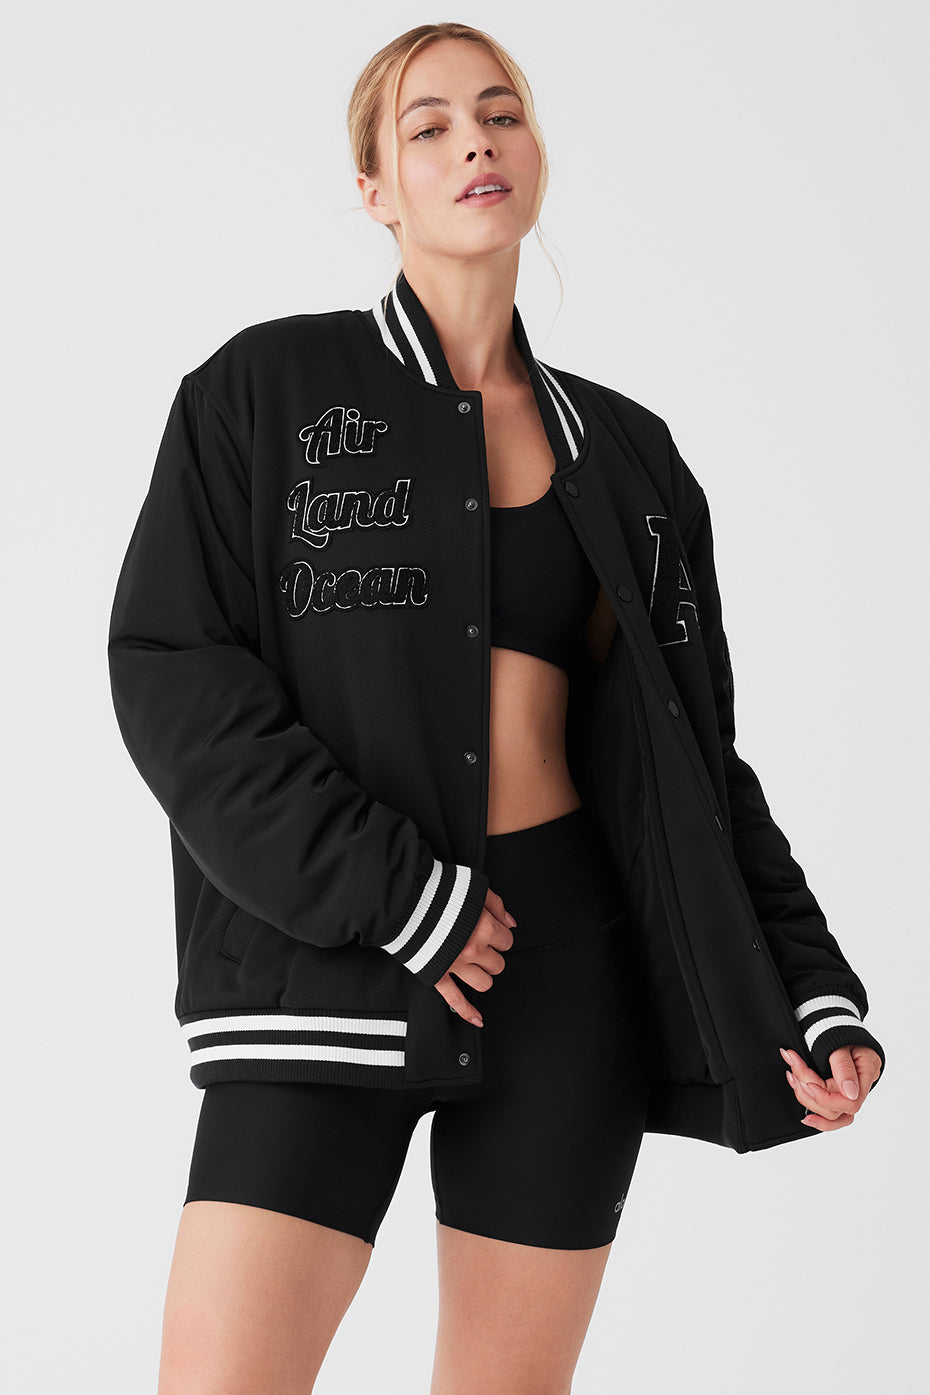 ALO Yoga Cropped Varsity jacket IT G.O.A.T patch 🔥 JISOO 🔥 Blackpink  White S M